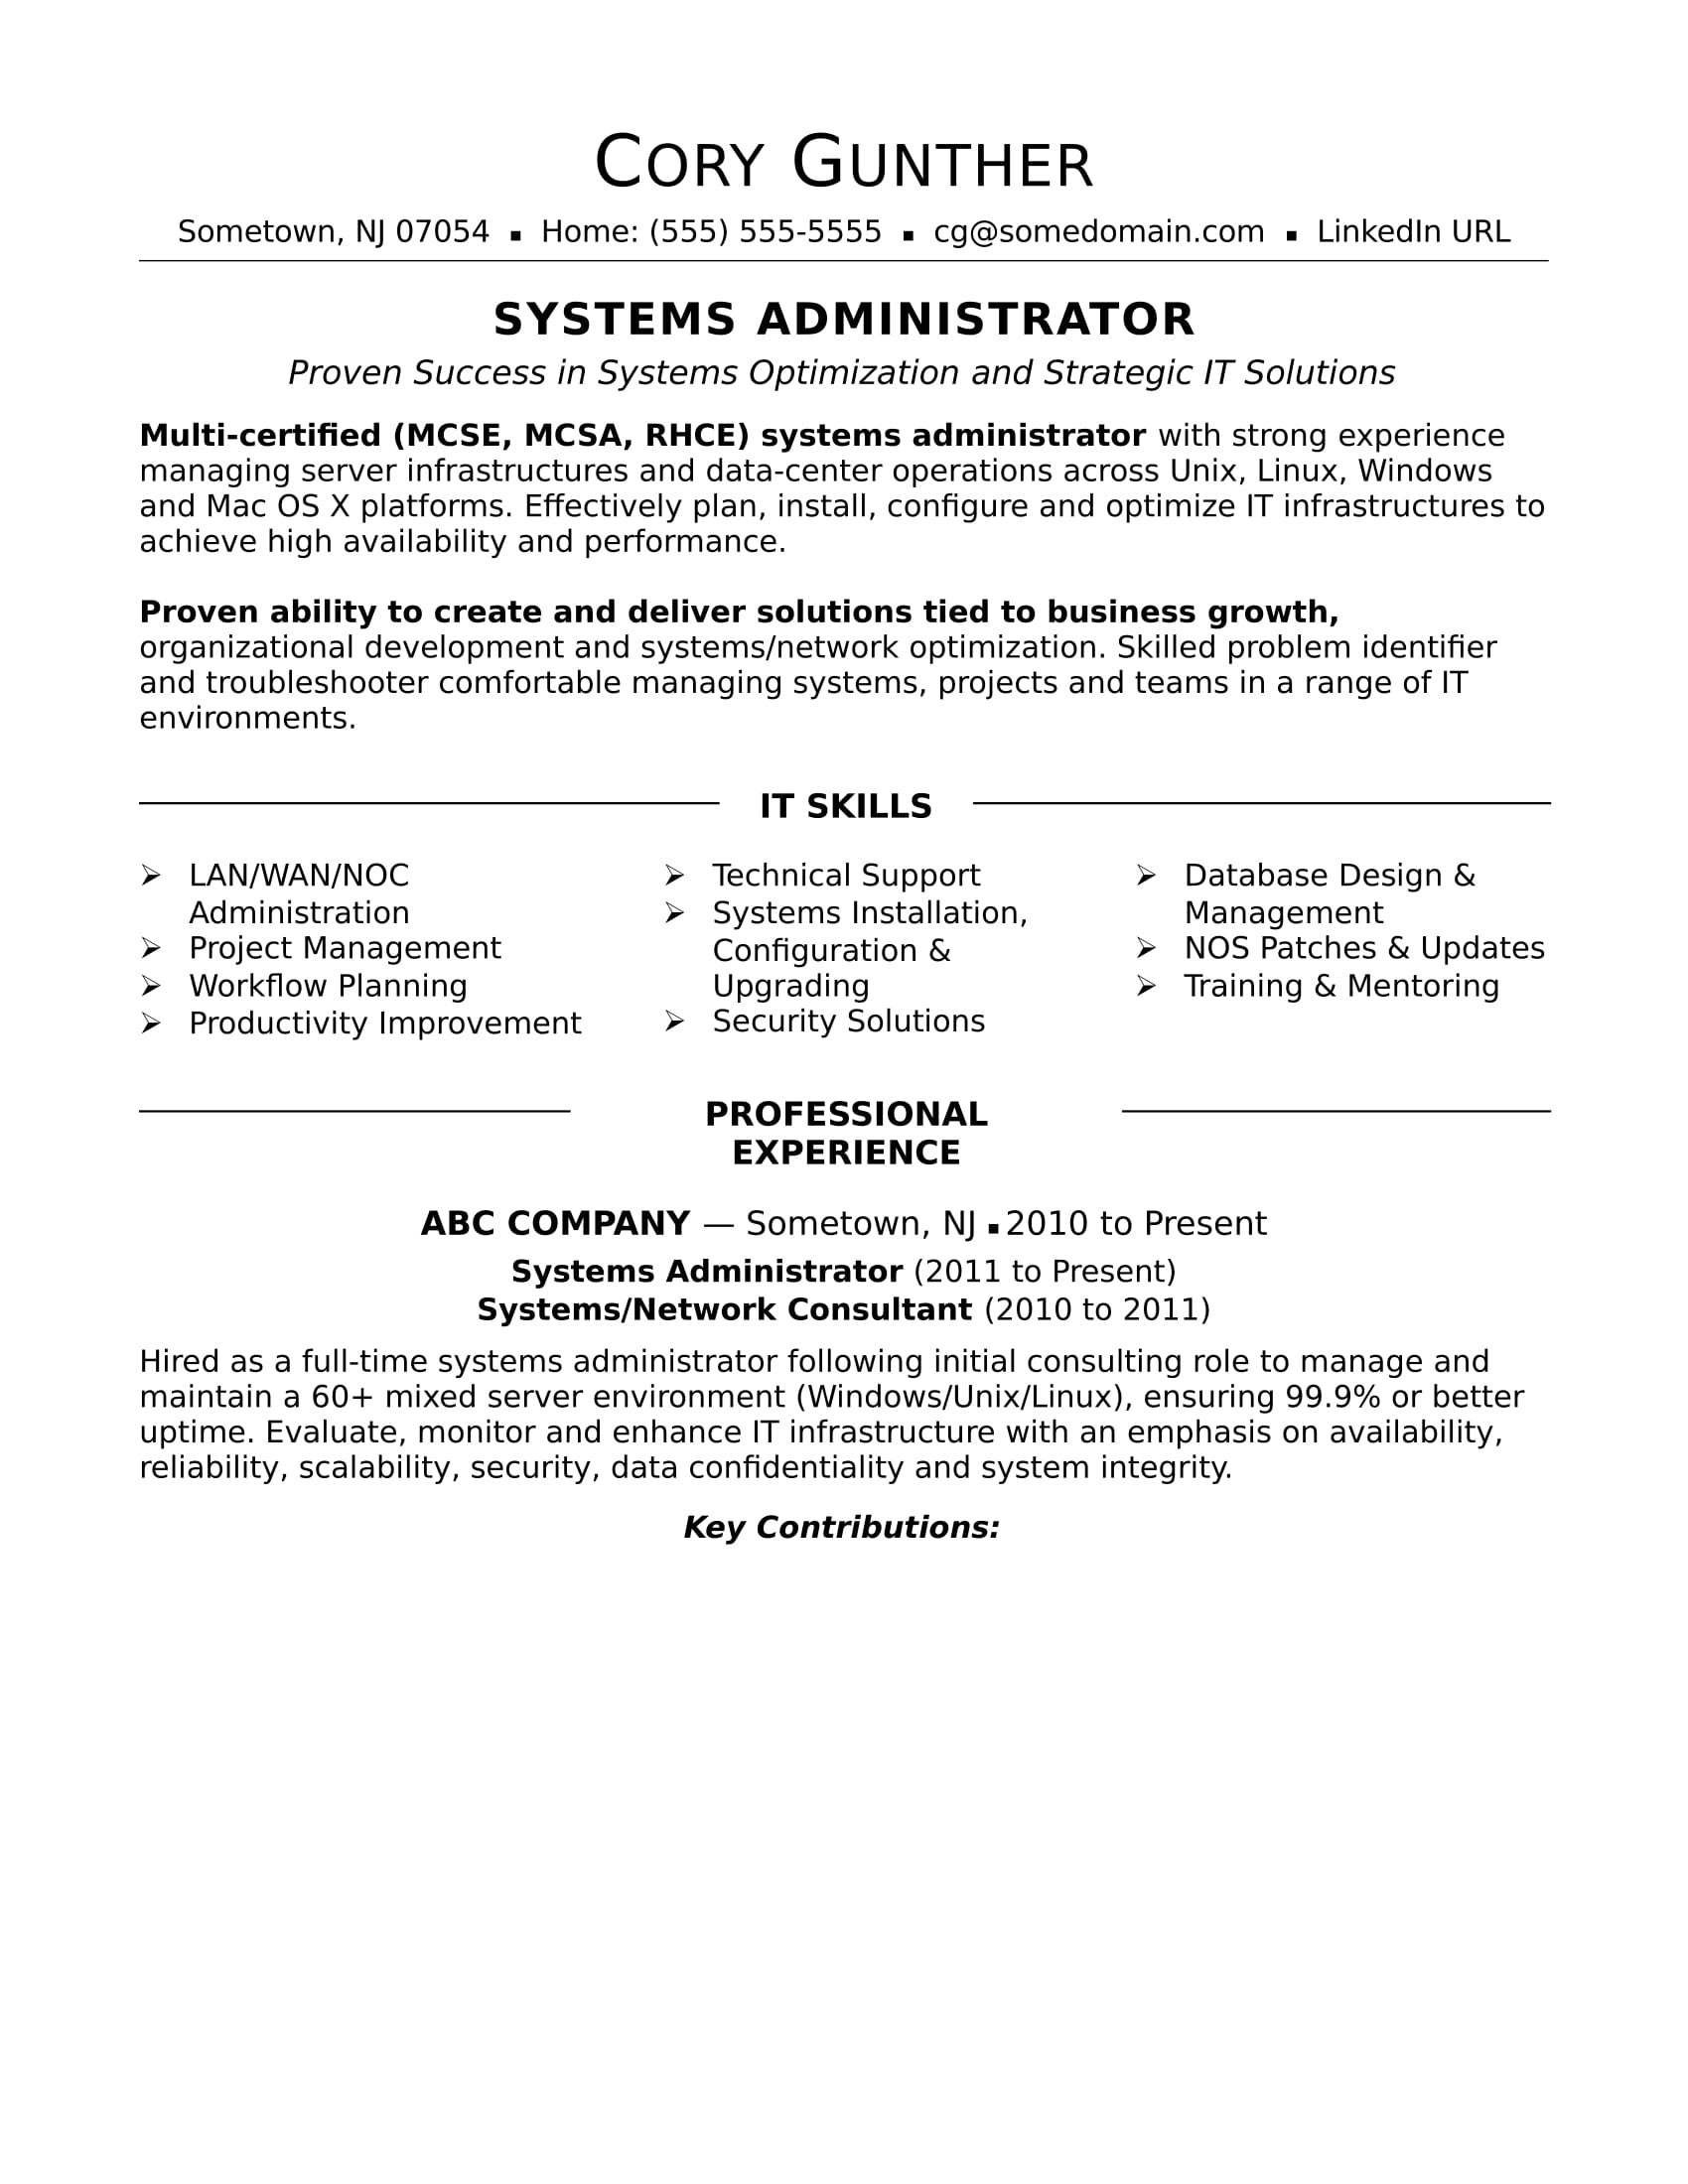 Linux System Administrator Sample Resume 5 Years Experience Sample Resume for An Experienced Systems Administrator Monster.com